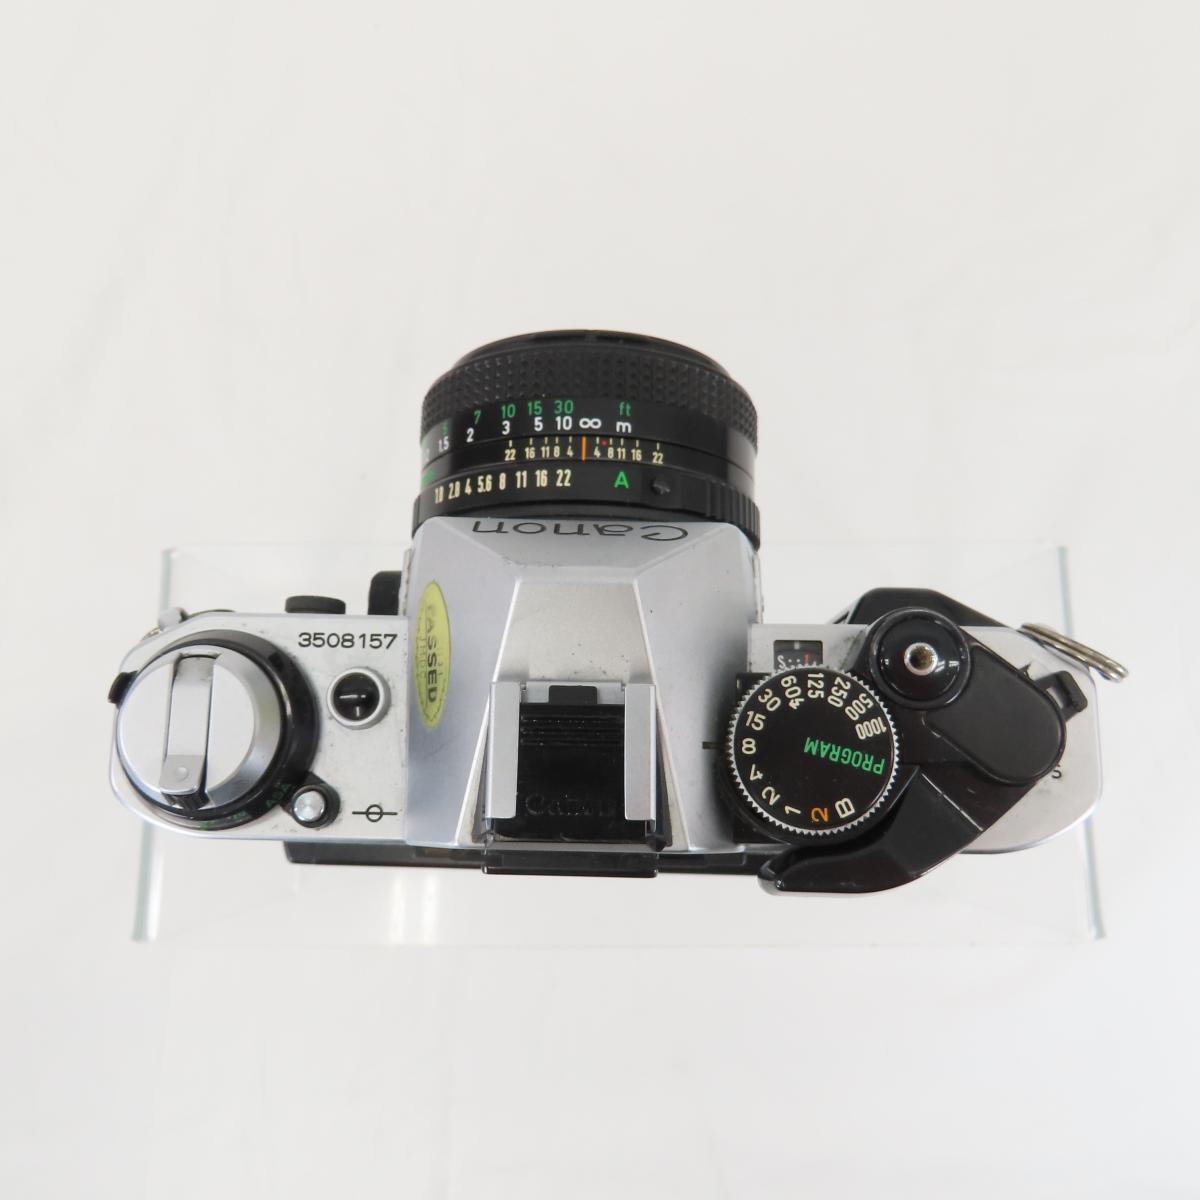 Canon AE-1 Program 35mm Film Camera with lens